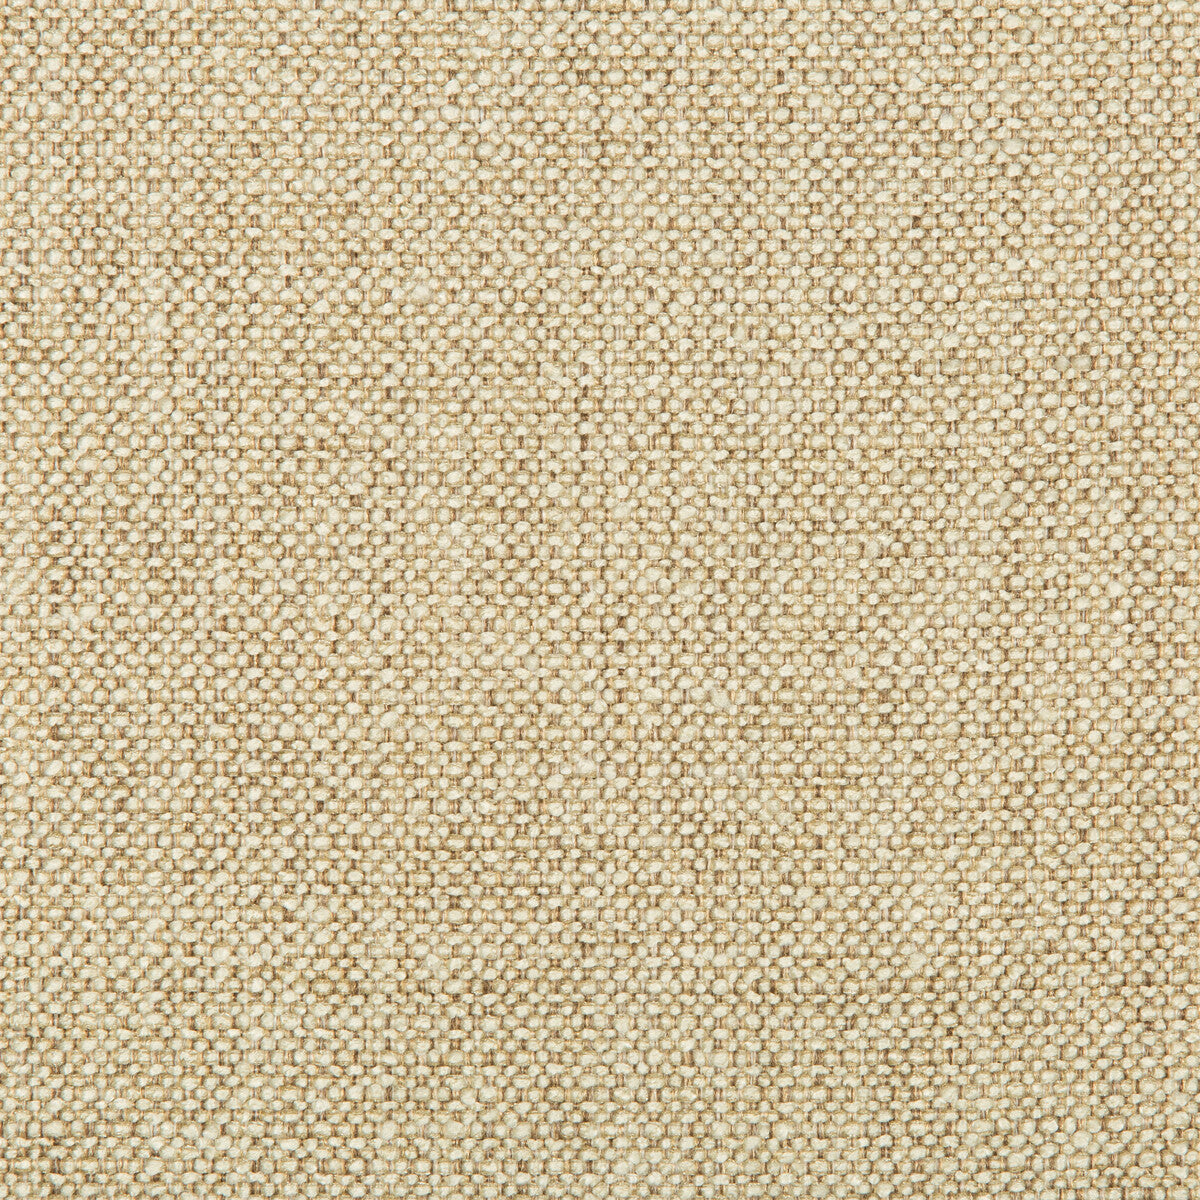 Kravet Smart fabric in 32964-16 color - pattern 32964.16.0 - by Kravet Smart